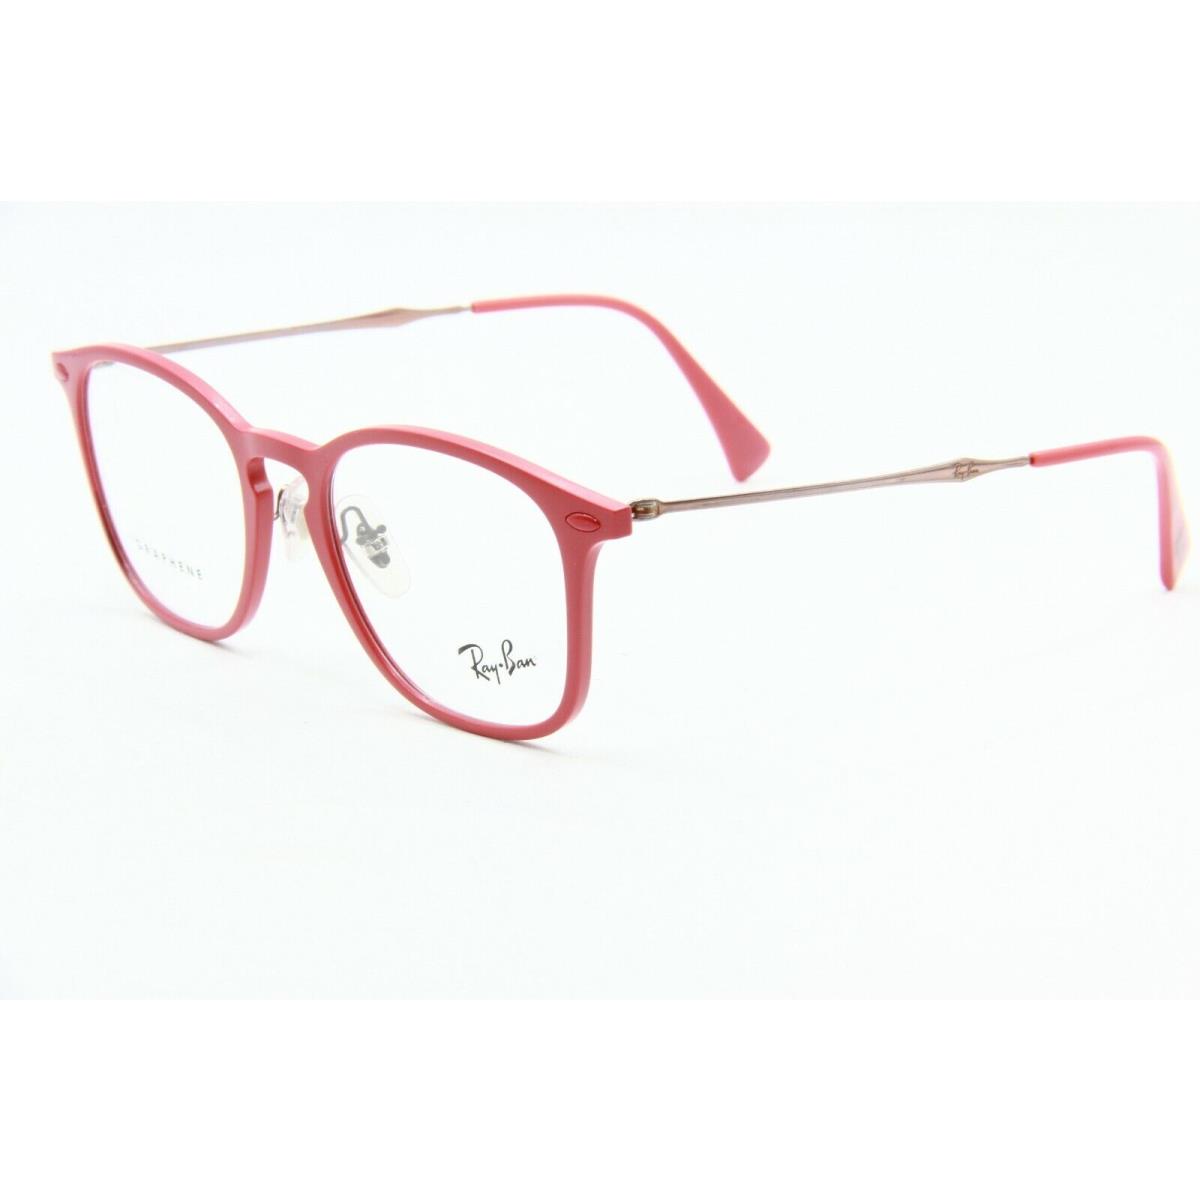 Ray-ban Ray Ban RB 8954 5758 Pink Eyeglasses Frame RB 8954 RX 48-18